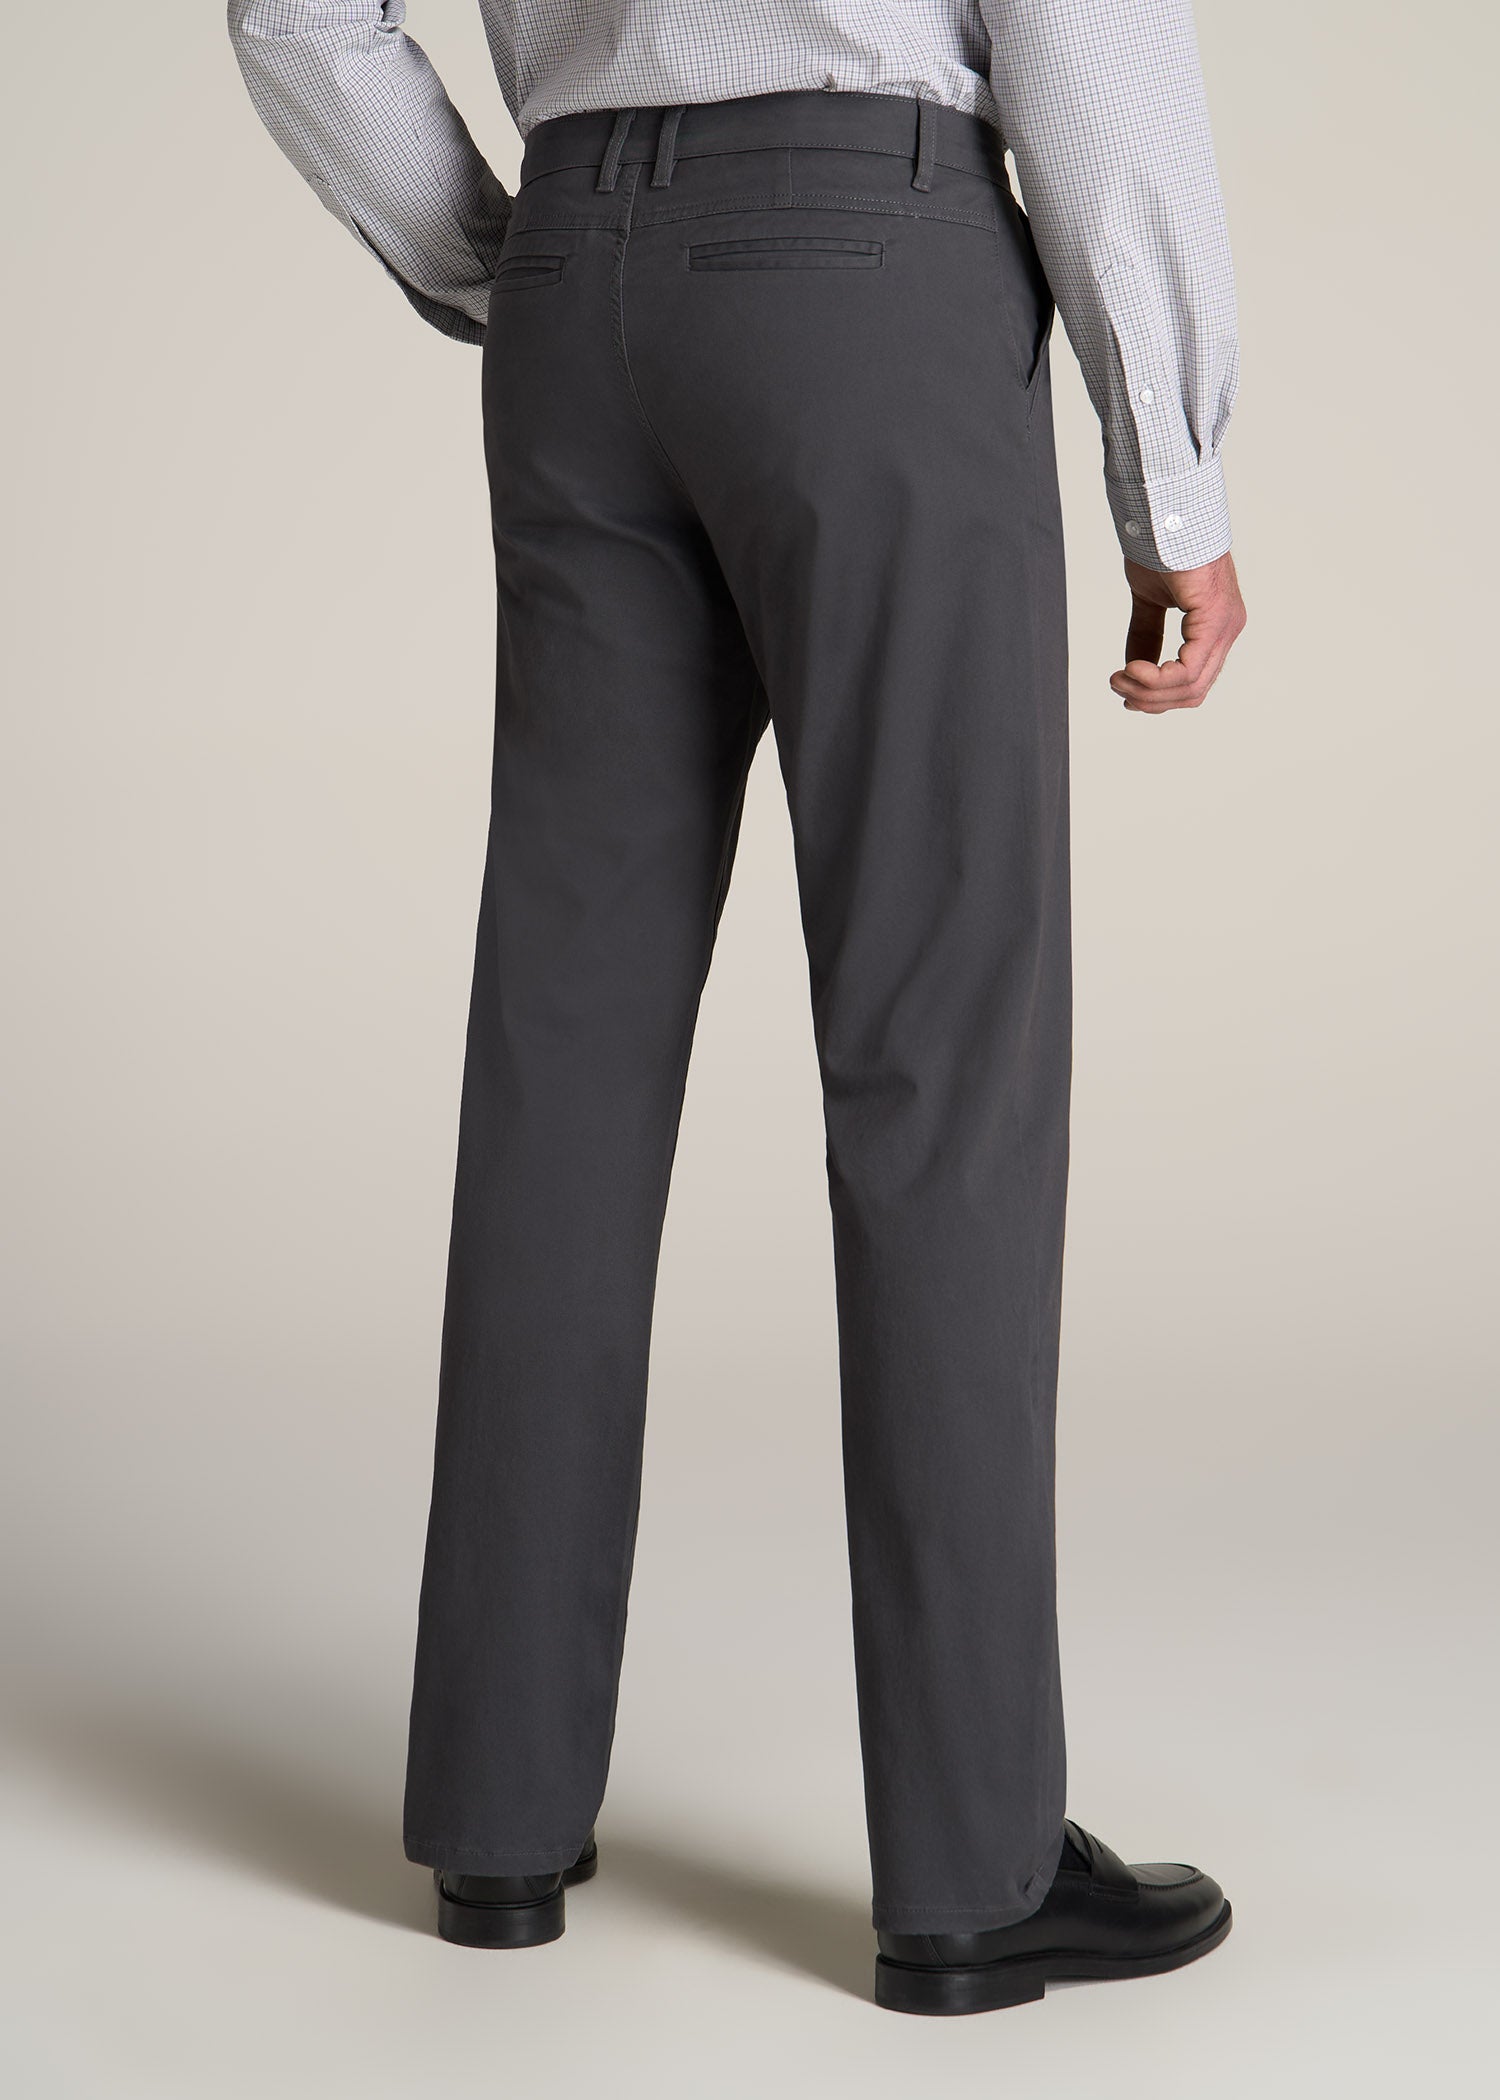 MASON'S, Light grey Women's Casual Pants